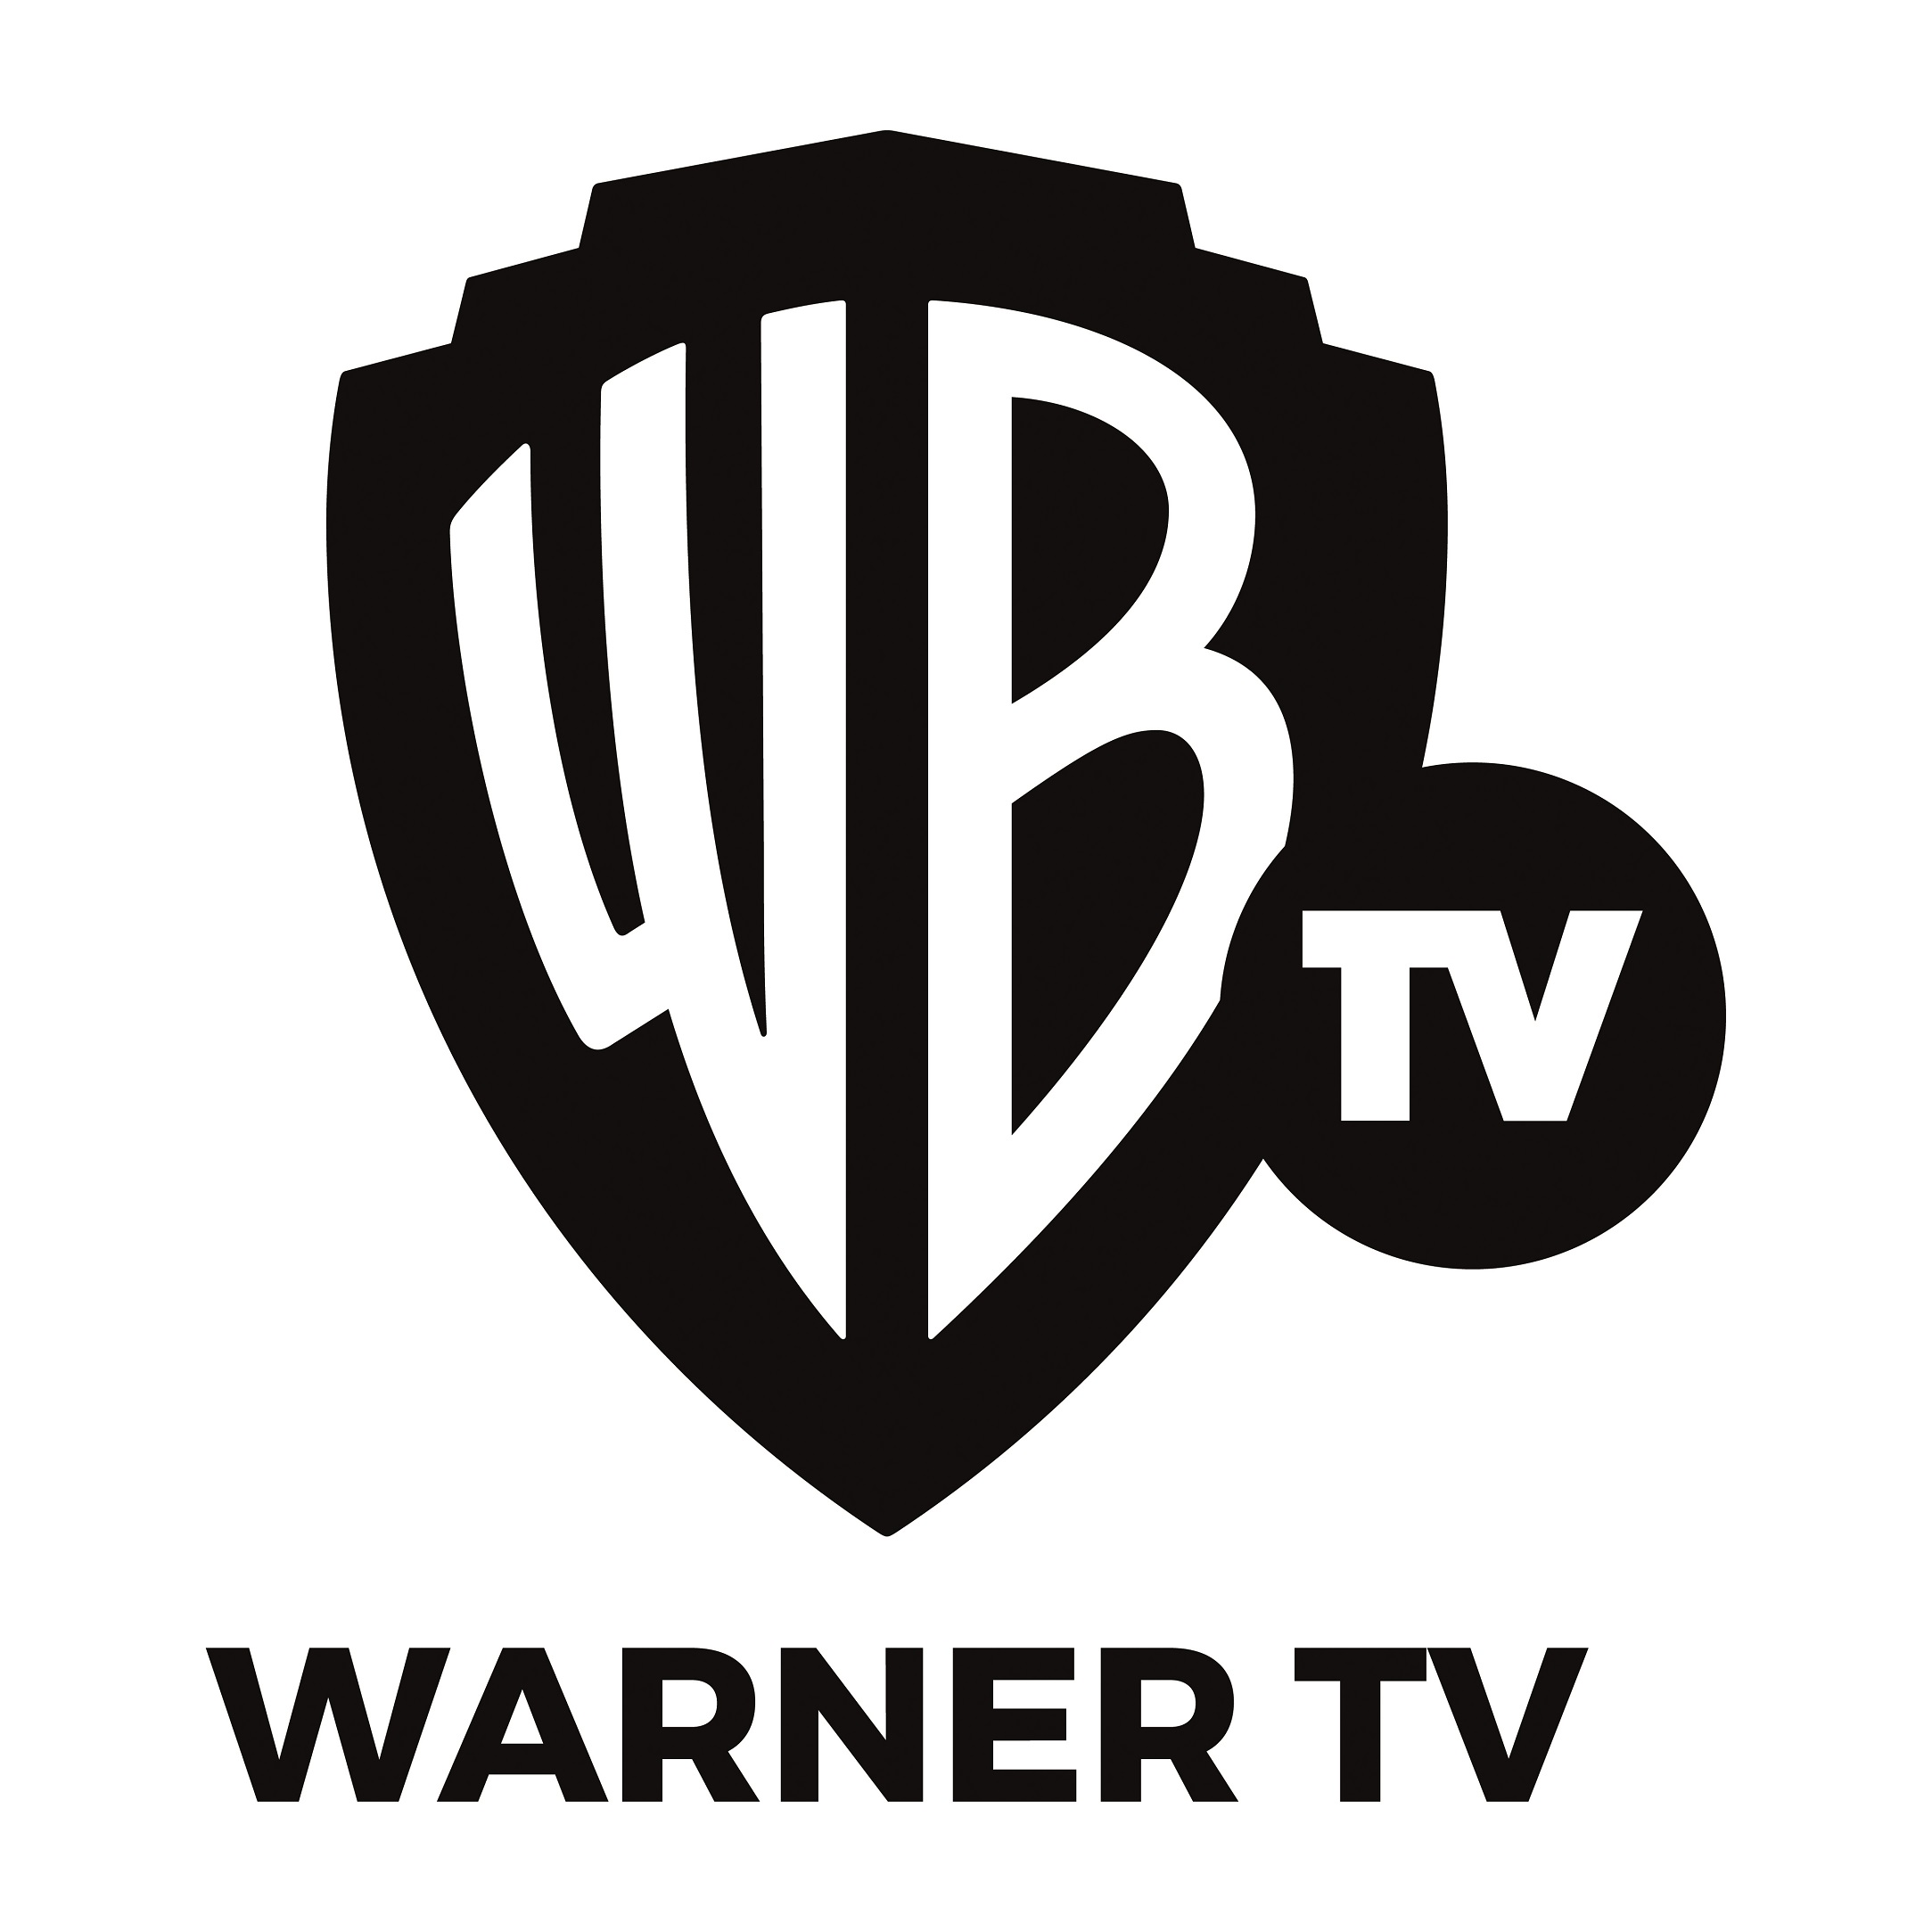 wbtv warner tv logo black